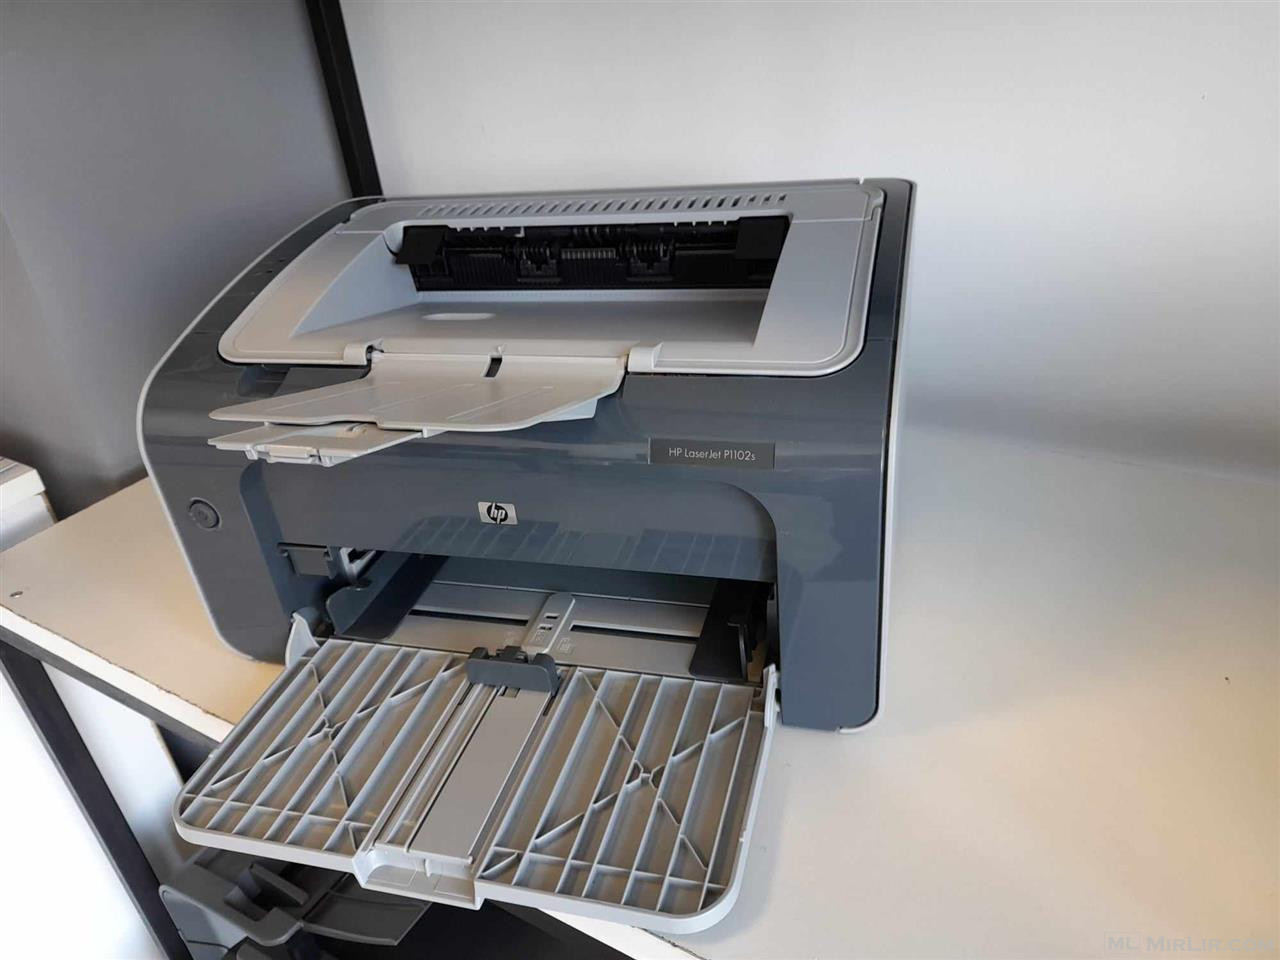 Printer HP P1102S